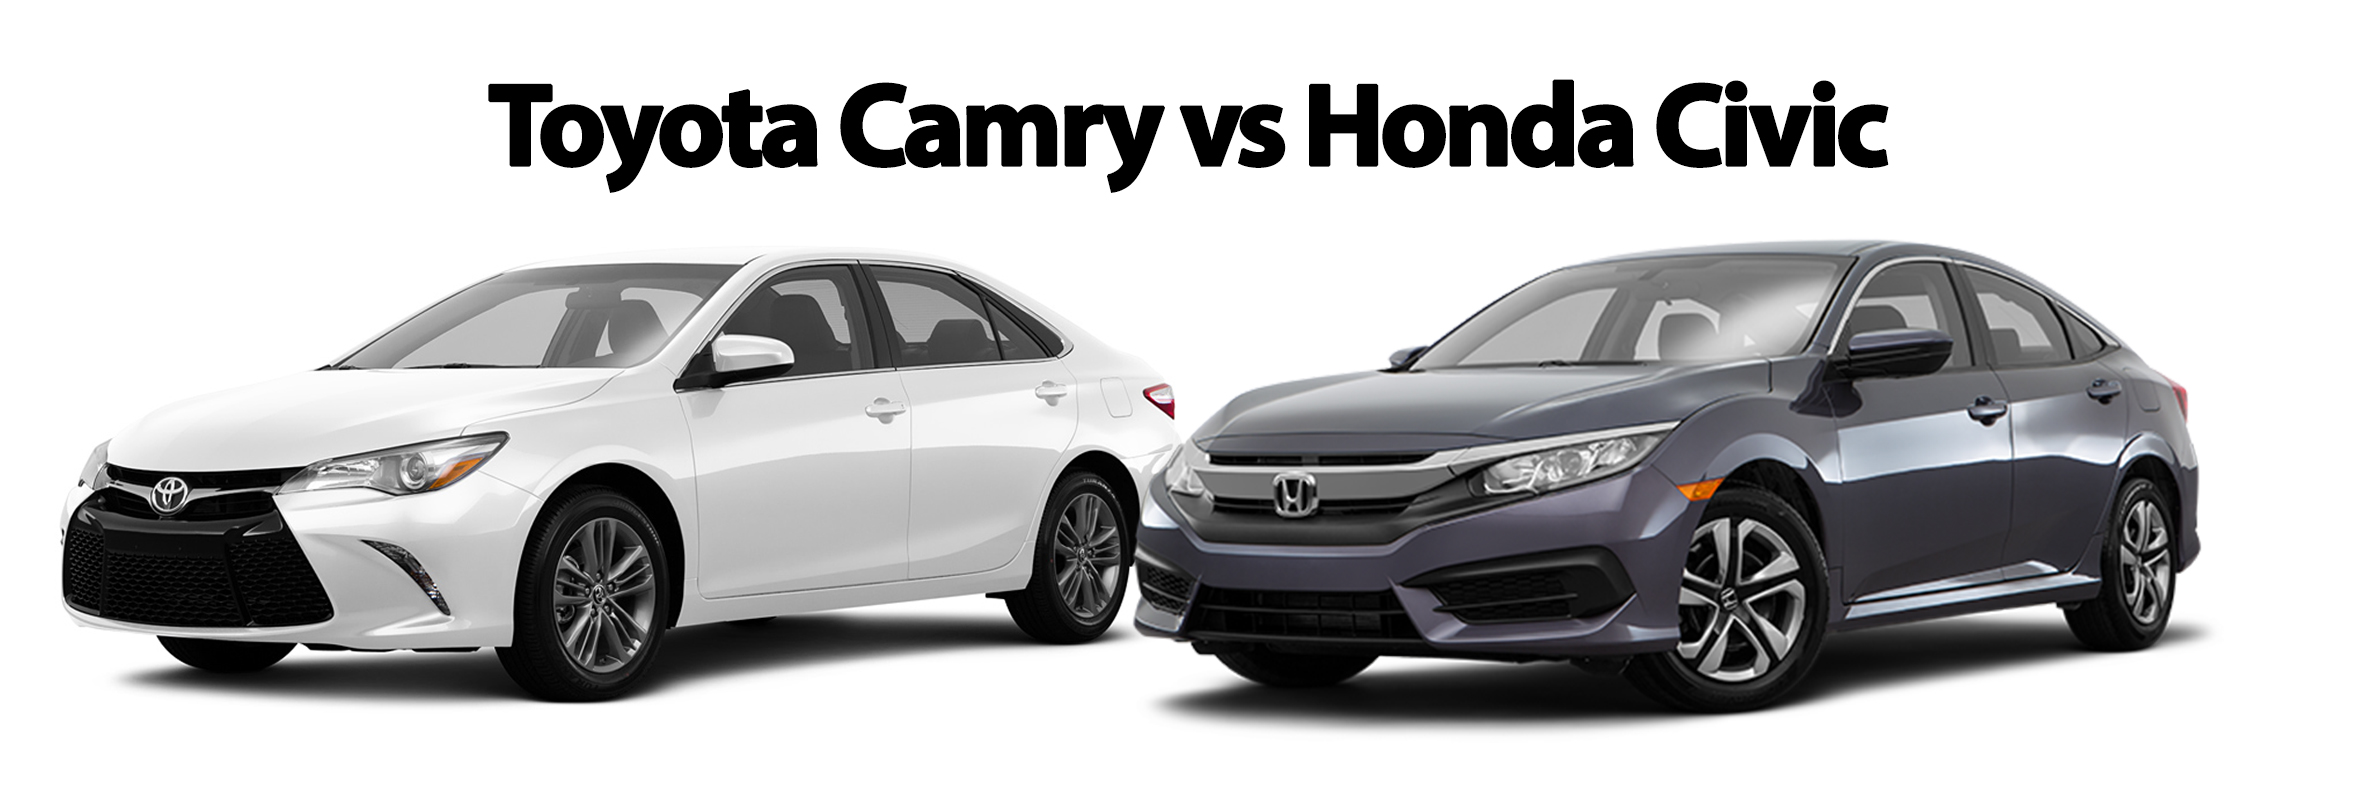 Toyota Camry vs Honda Civic Toyota of Ardmore